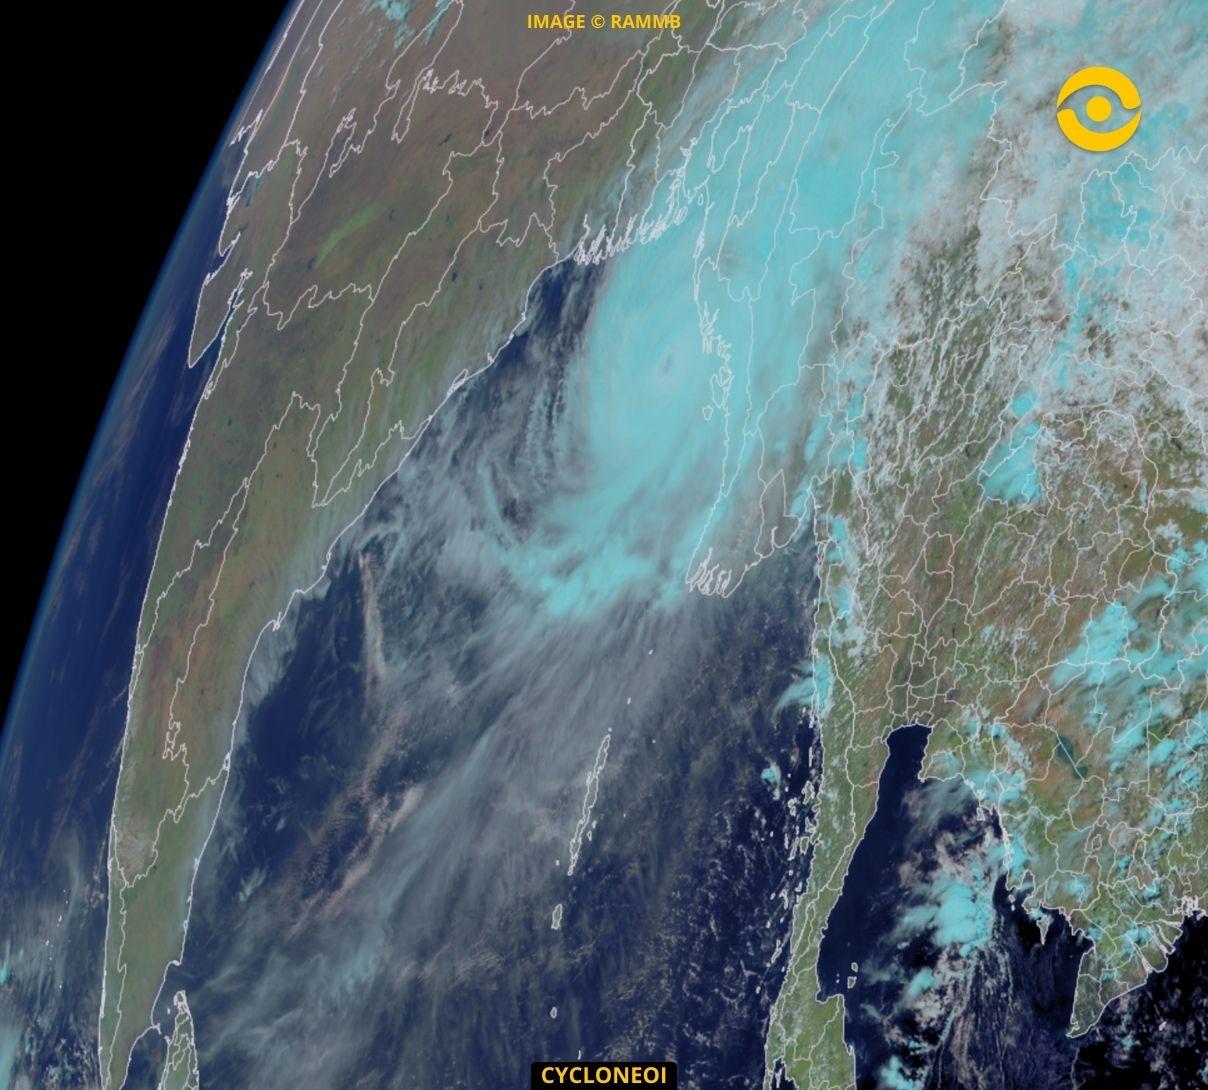 Image du Cyclone MOCHA le dimanche matin avant impact